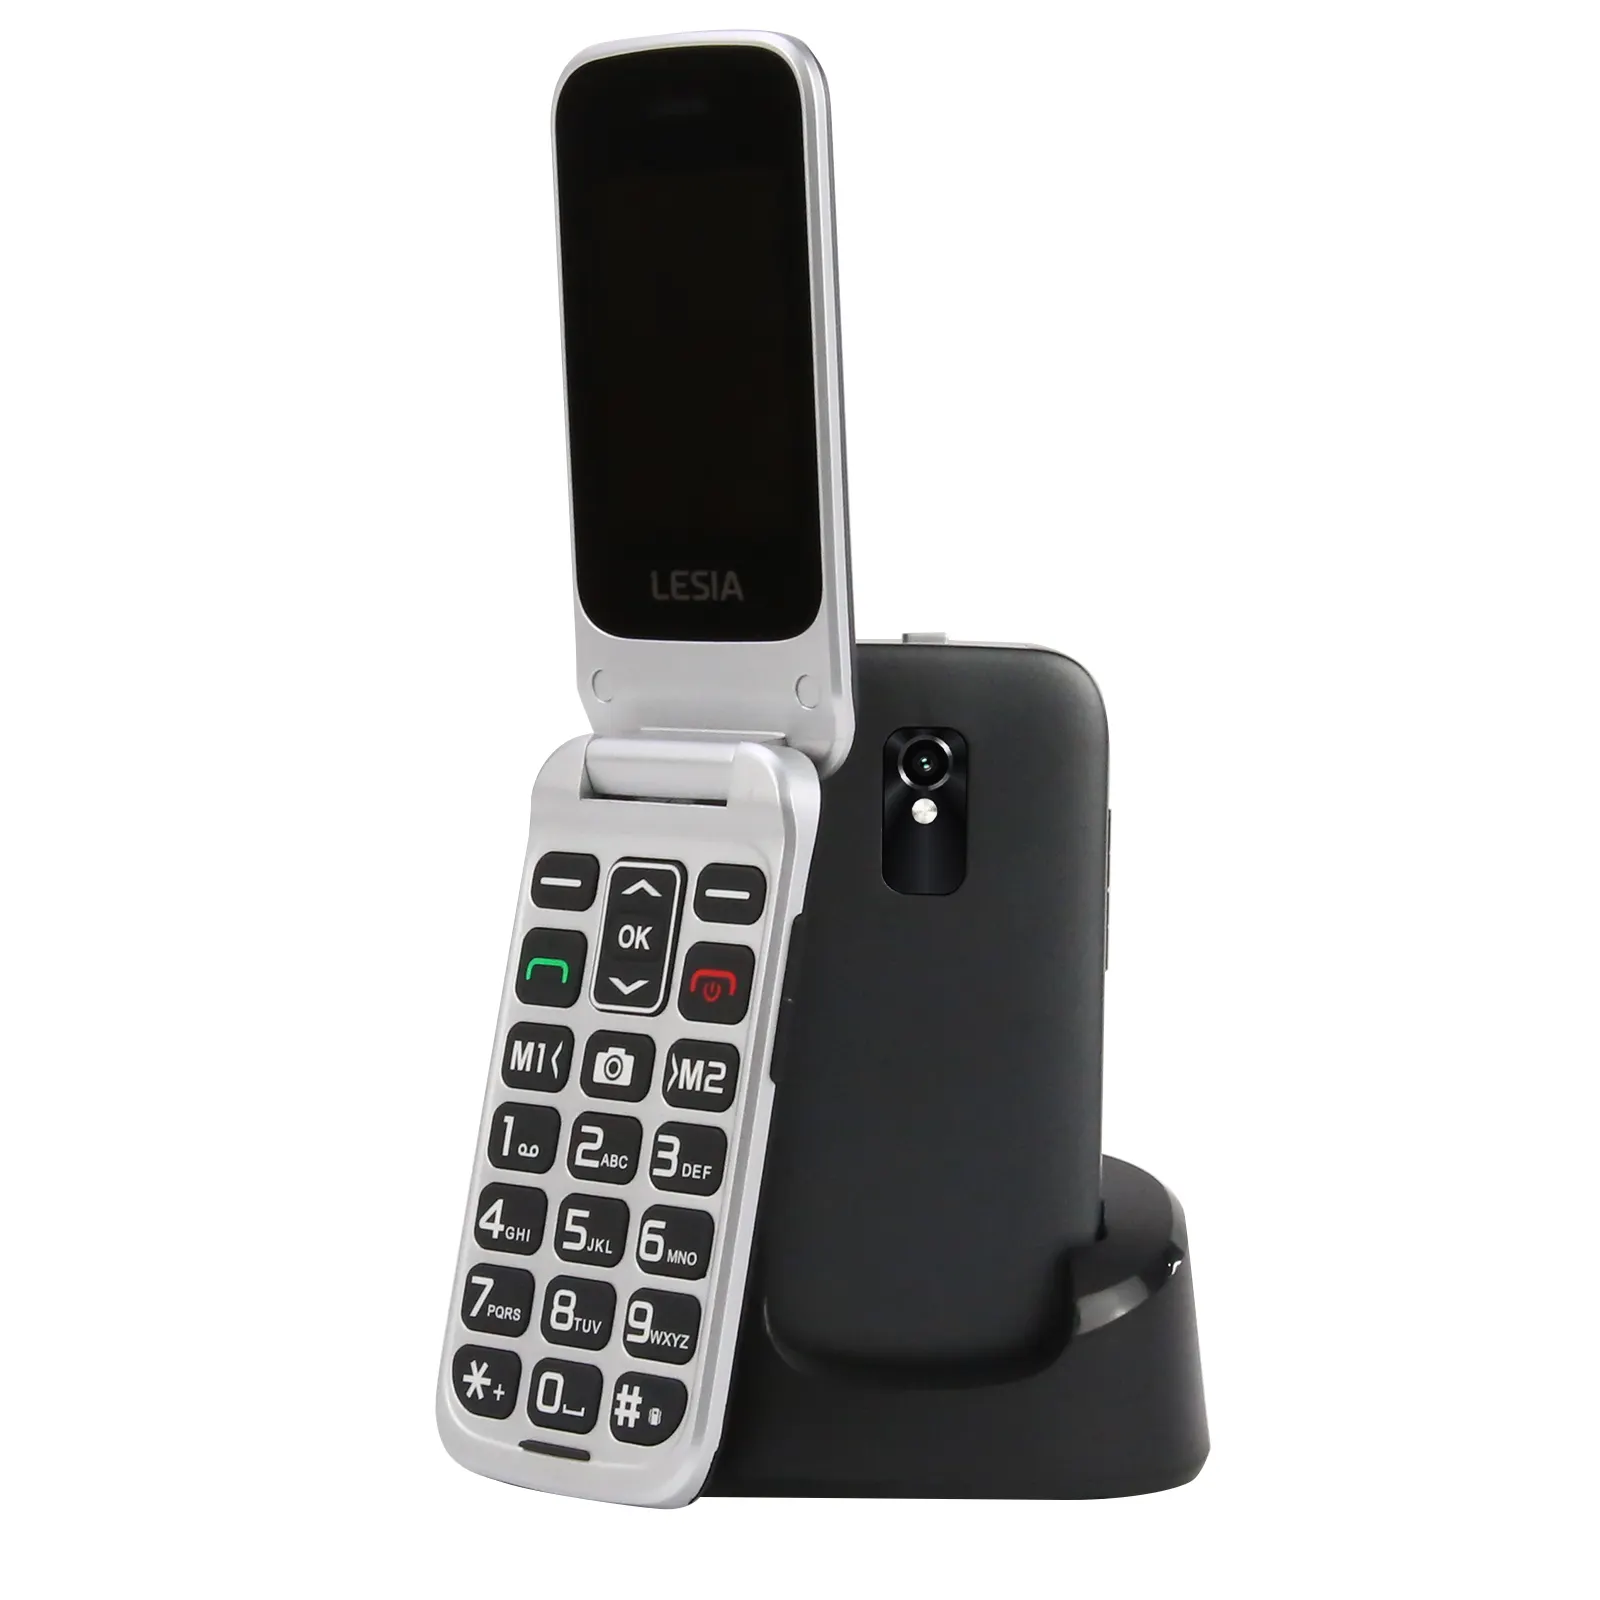 LESIA Flip feature cute mini 4G mobile phone 2 sim cheap price 2.4 inch portable phone with big keypad